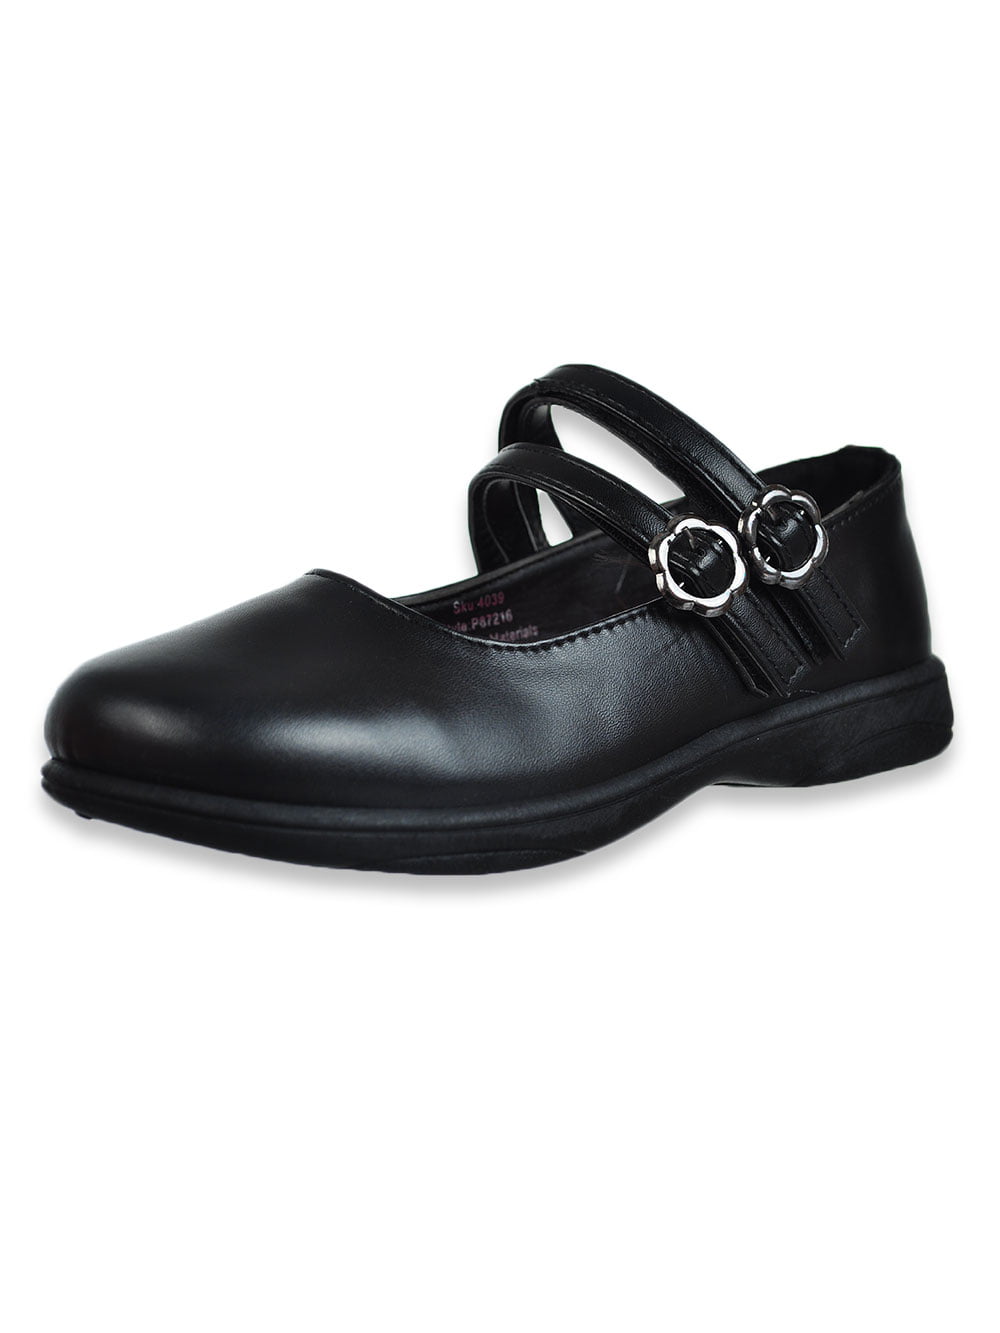 Easy Strider Girls Memory Foam School Uniform Shoes Black Patent Flower Size 6 Big Kid 